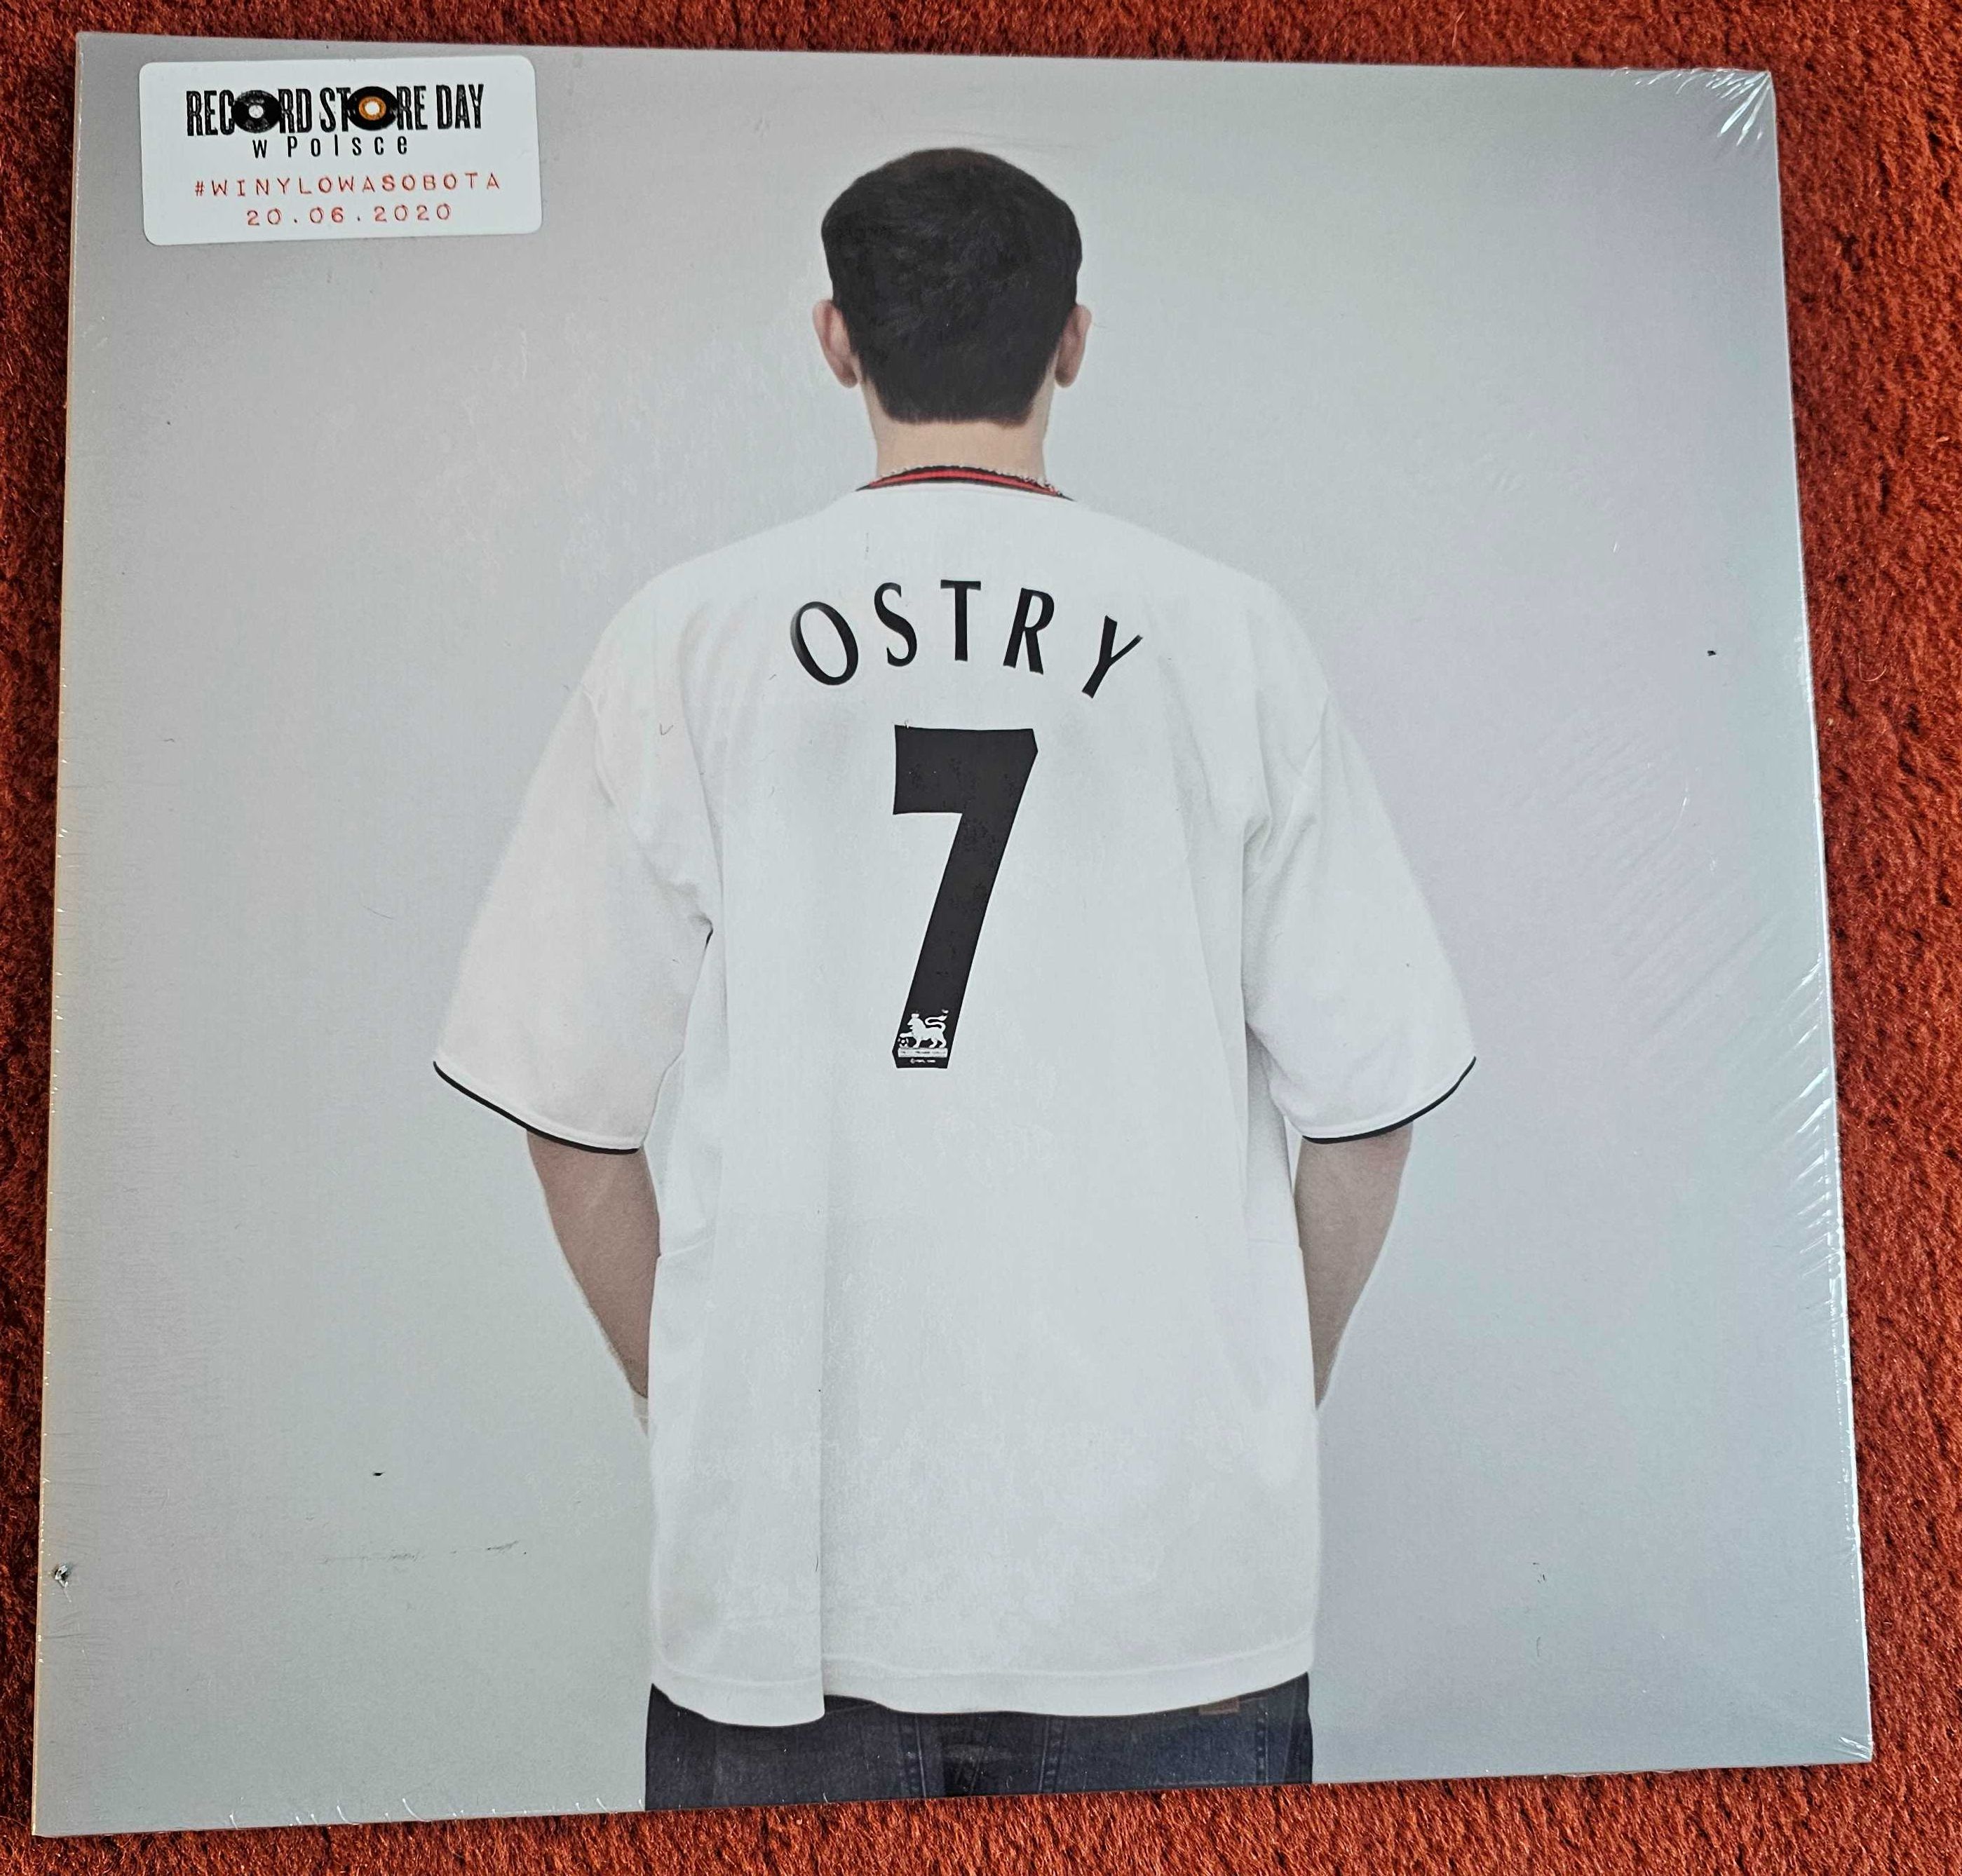 OSTR - 7 - RSD 2020 - Vinyl